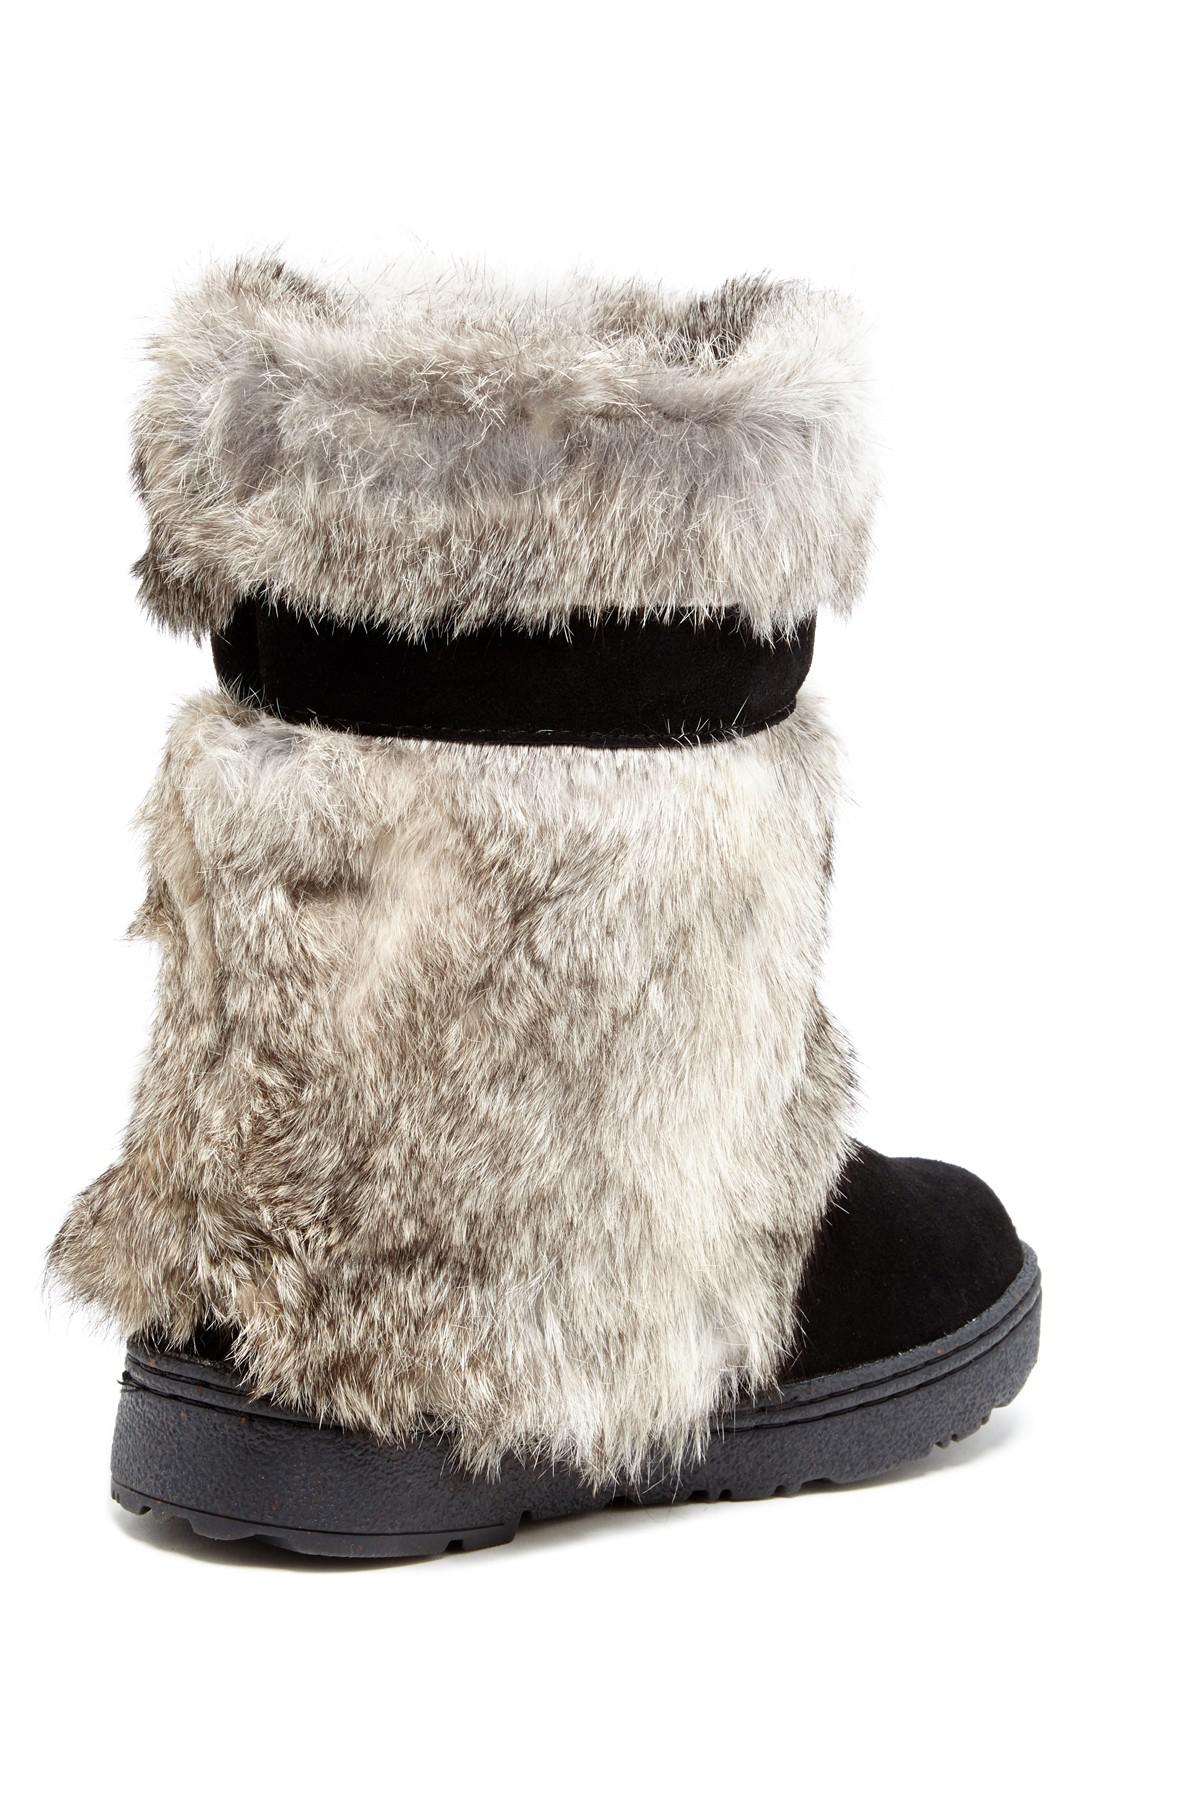 BEARPAW Tama Ii Genuine Rabbit Fur & Genuine Sheepskin Boot in Black ii ...